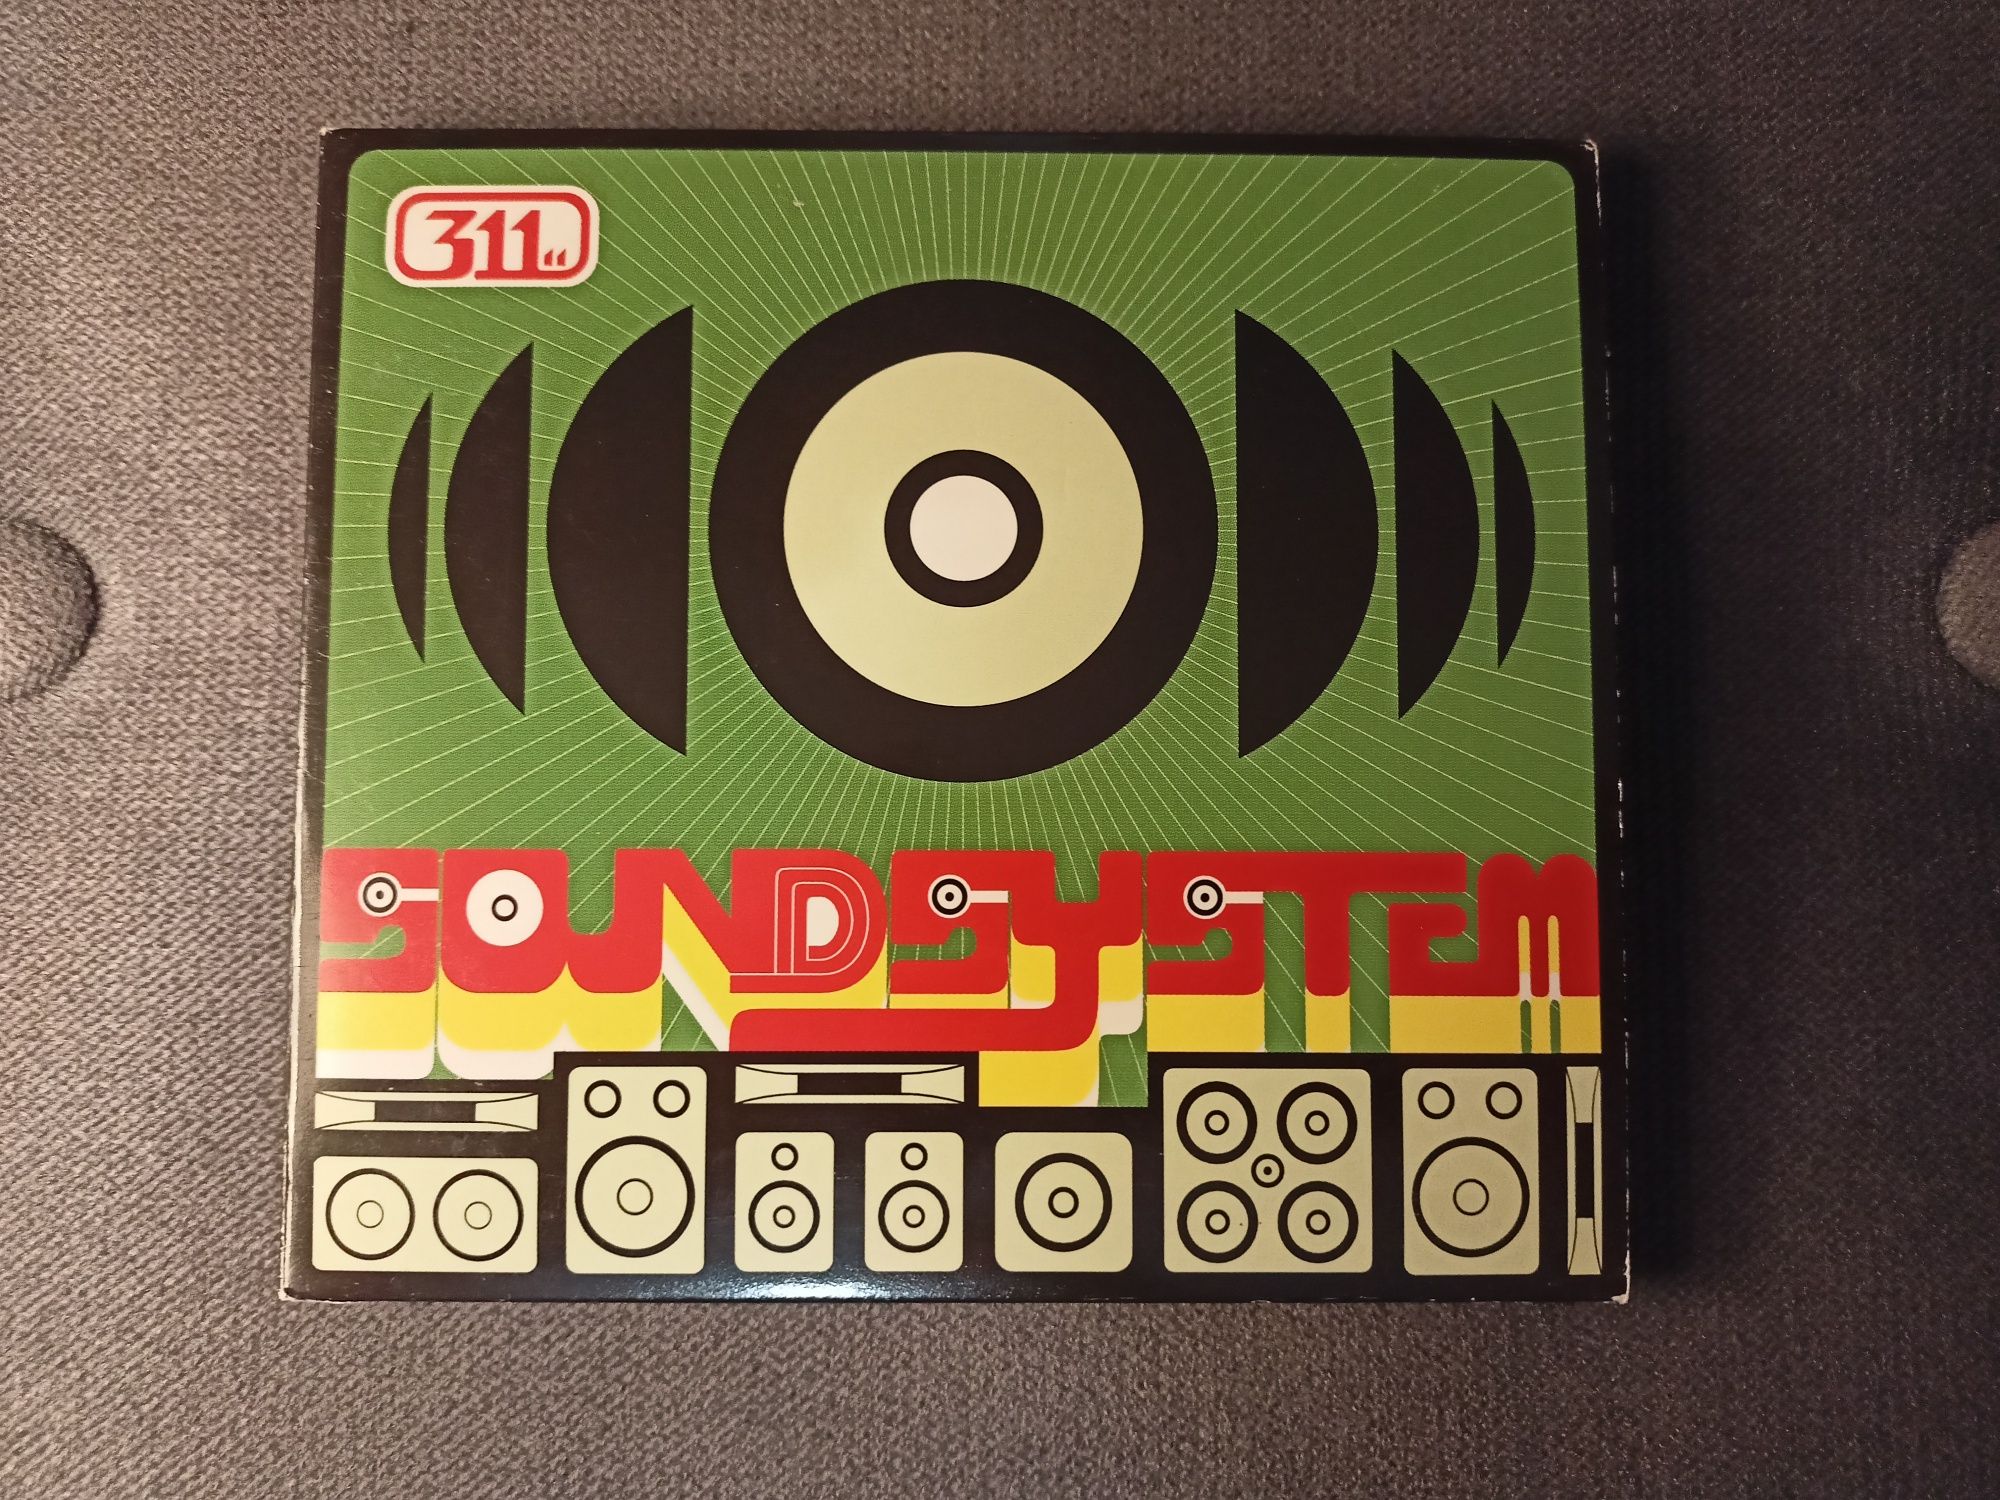 311 soundsystem - capricorn records / digipack